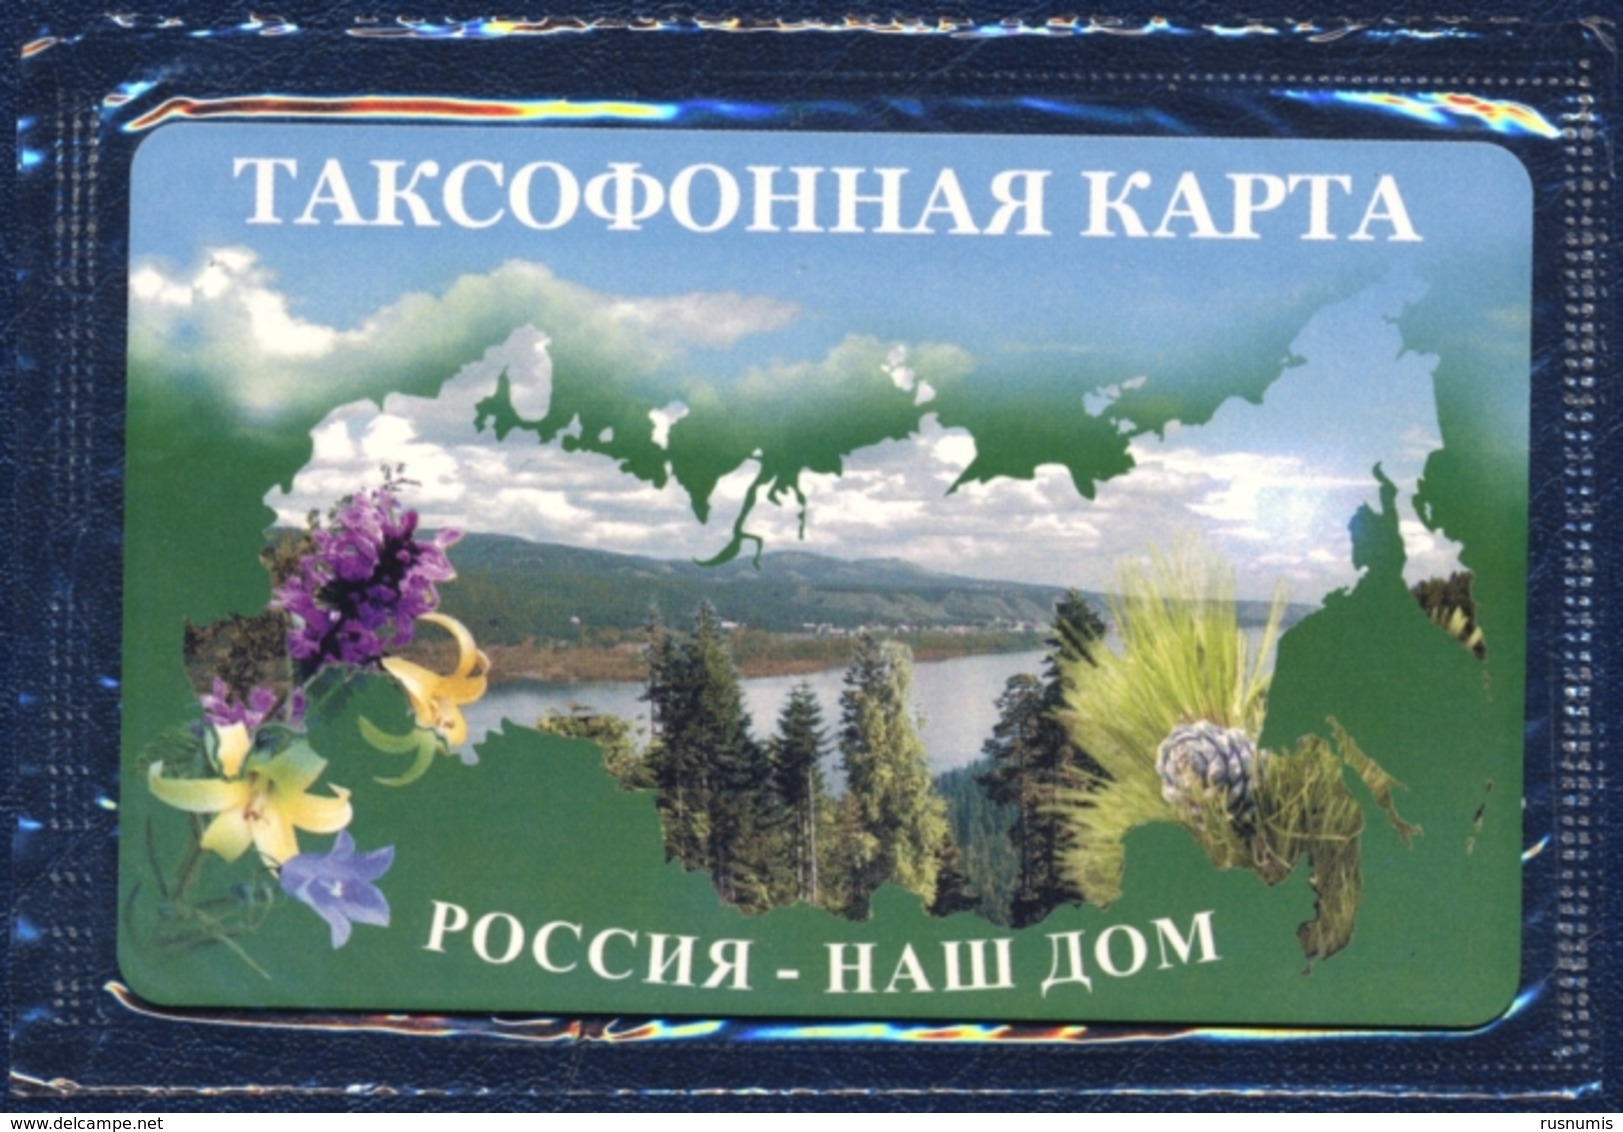 KAZAKHSTAN BAIKONUR SVYAZINFORM RUSSIAN SPACEPORT BAIKONUR 50 UNITS CHIP PHONECARD TELECARTE MINT SEALED - Kasachstan